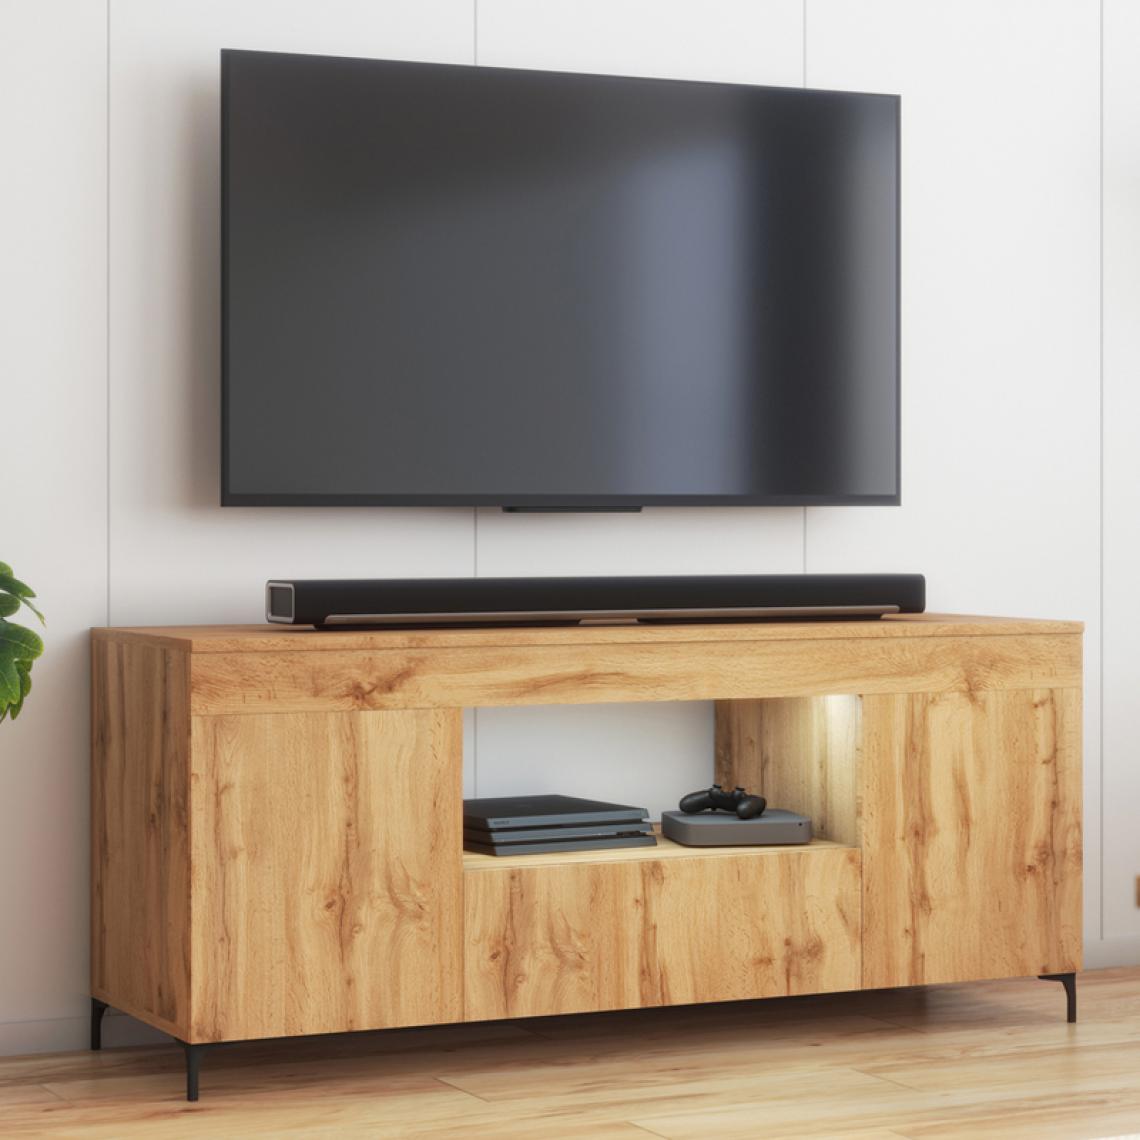 Selsey - Meuble tv avec LED - GUSTO - 137 cm - lancaster - style contemporain - Meubles TV, Hi-Fi